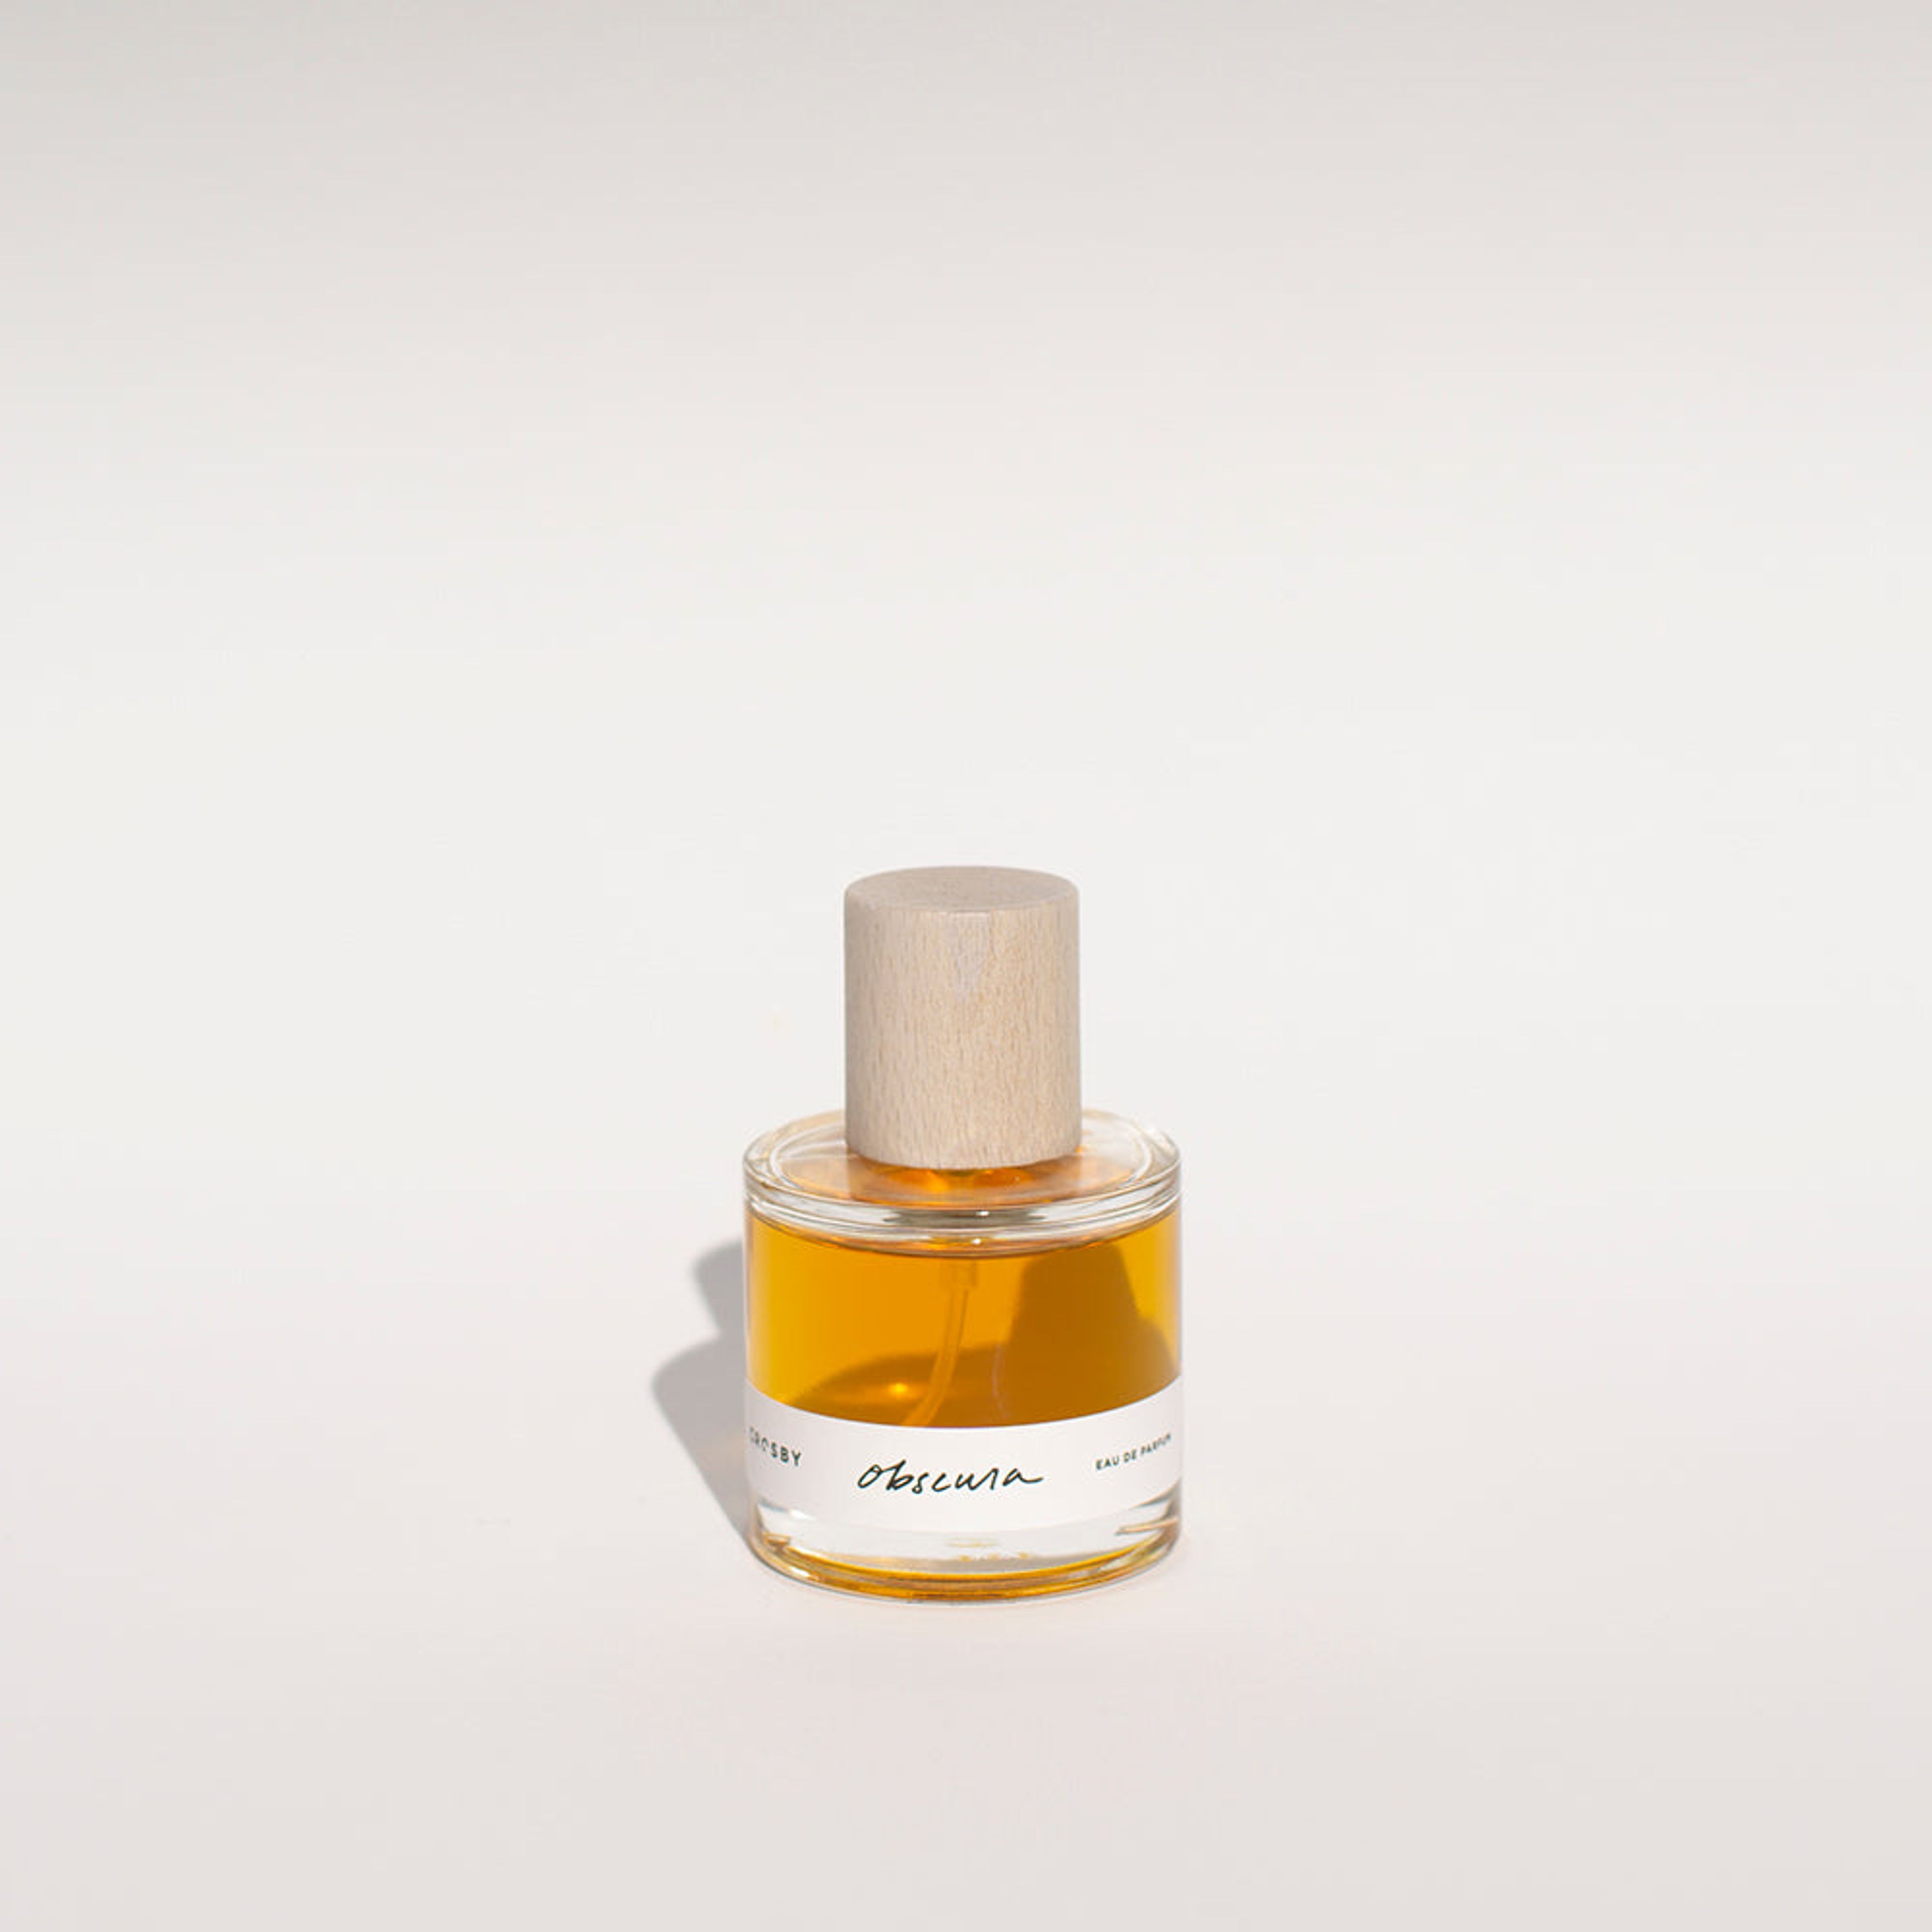 Residency Collection Eau de Parfum - OBSCURA